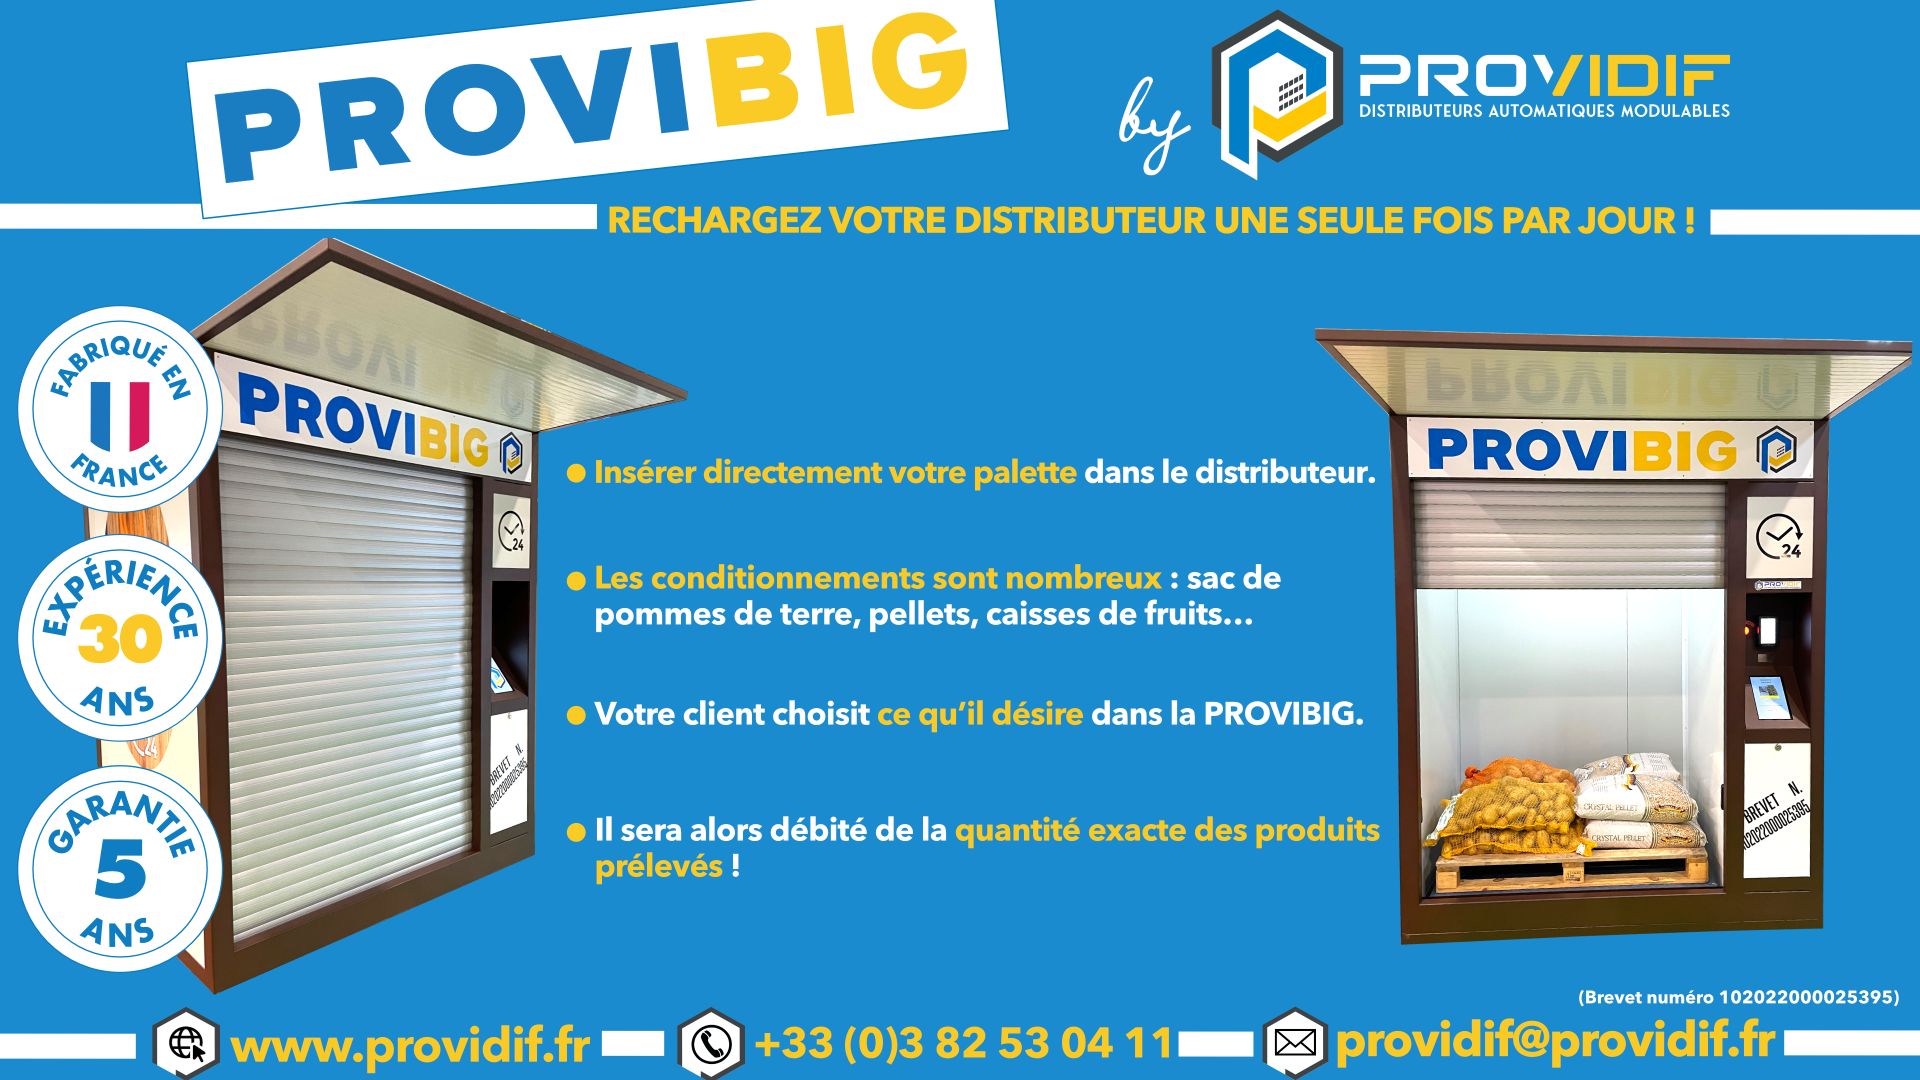 Provibig - providif_0